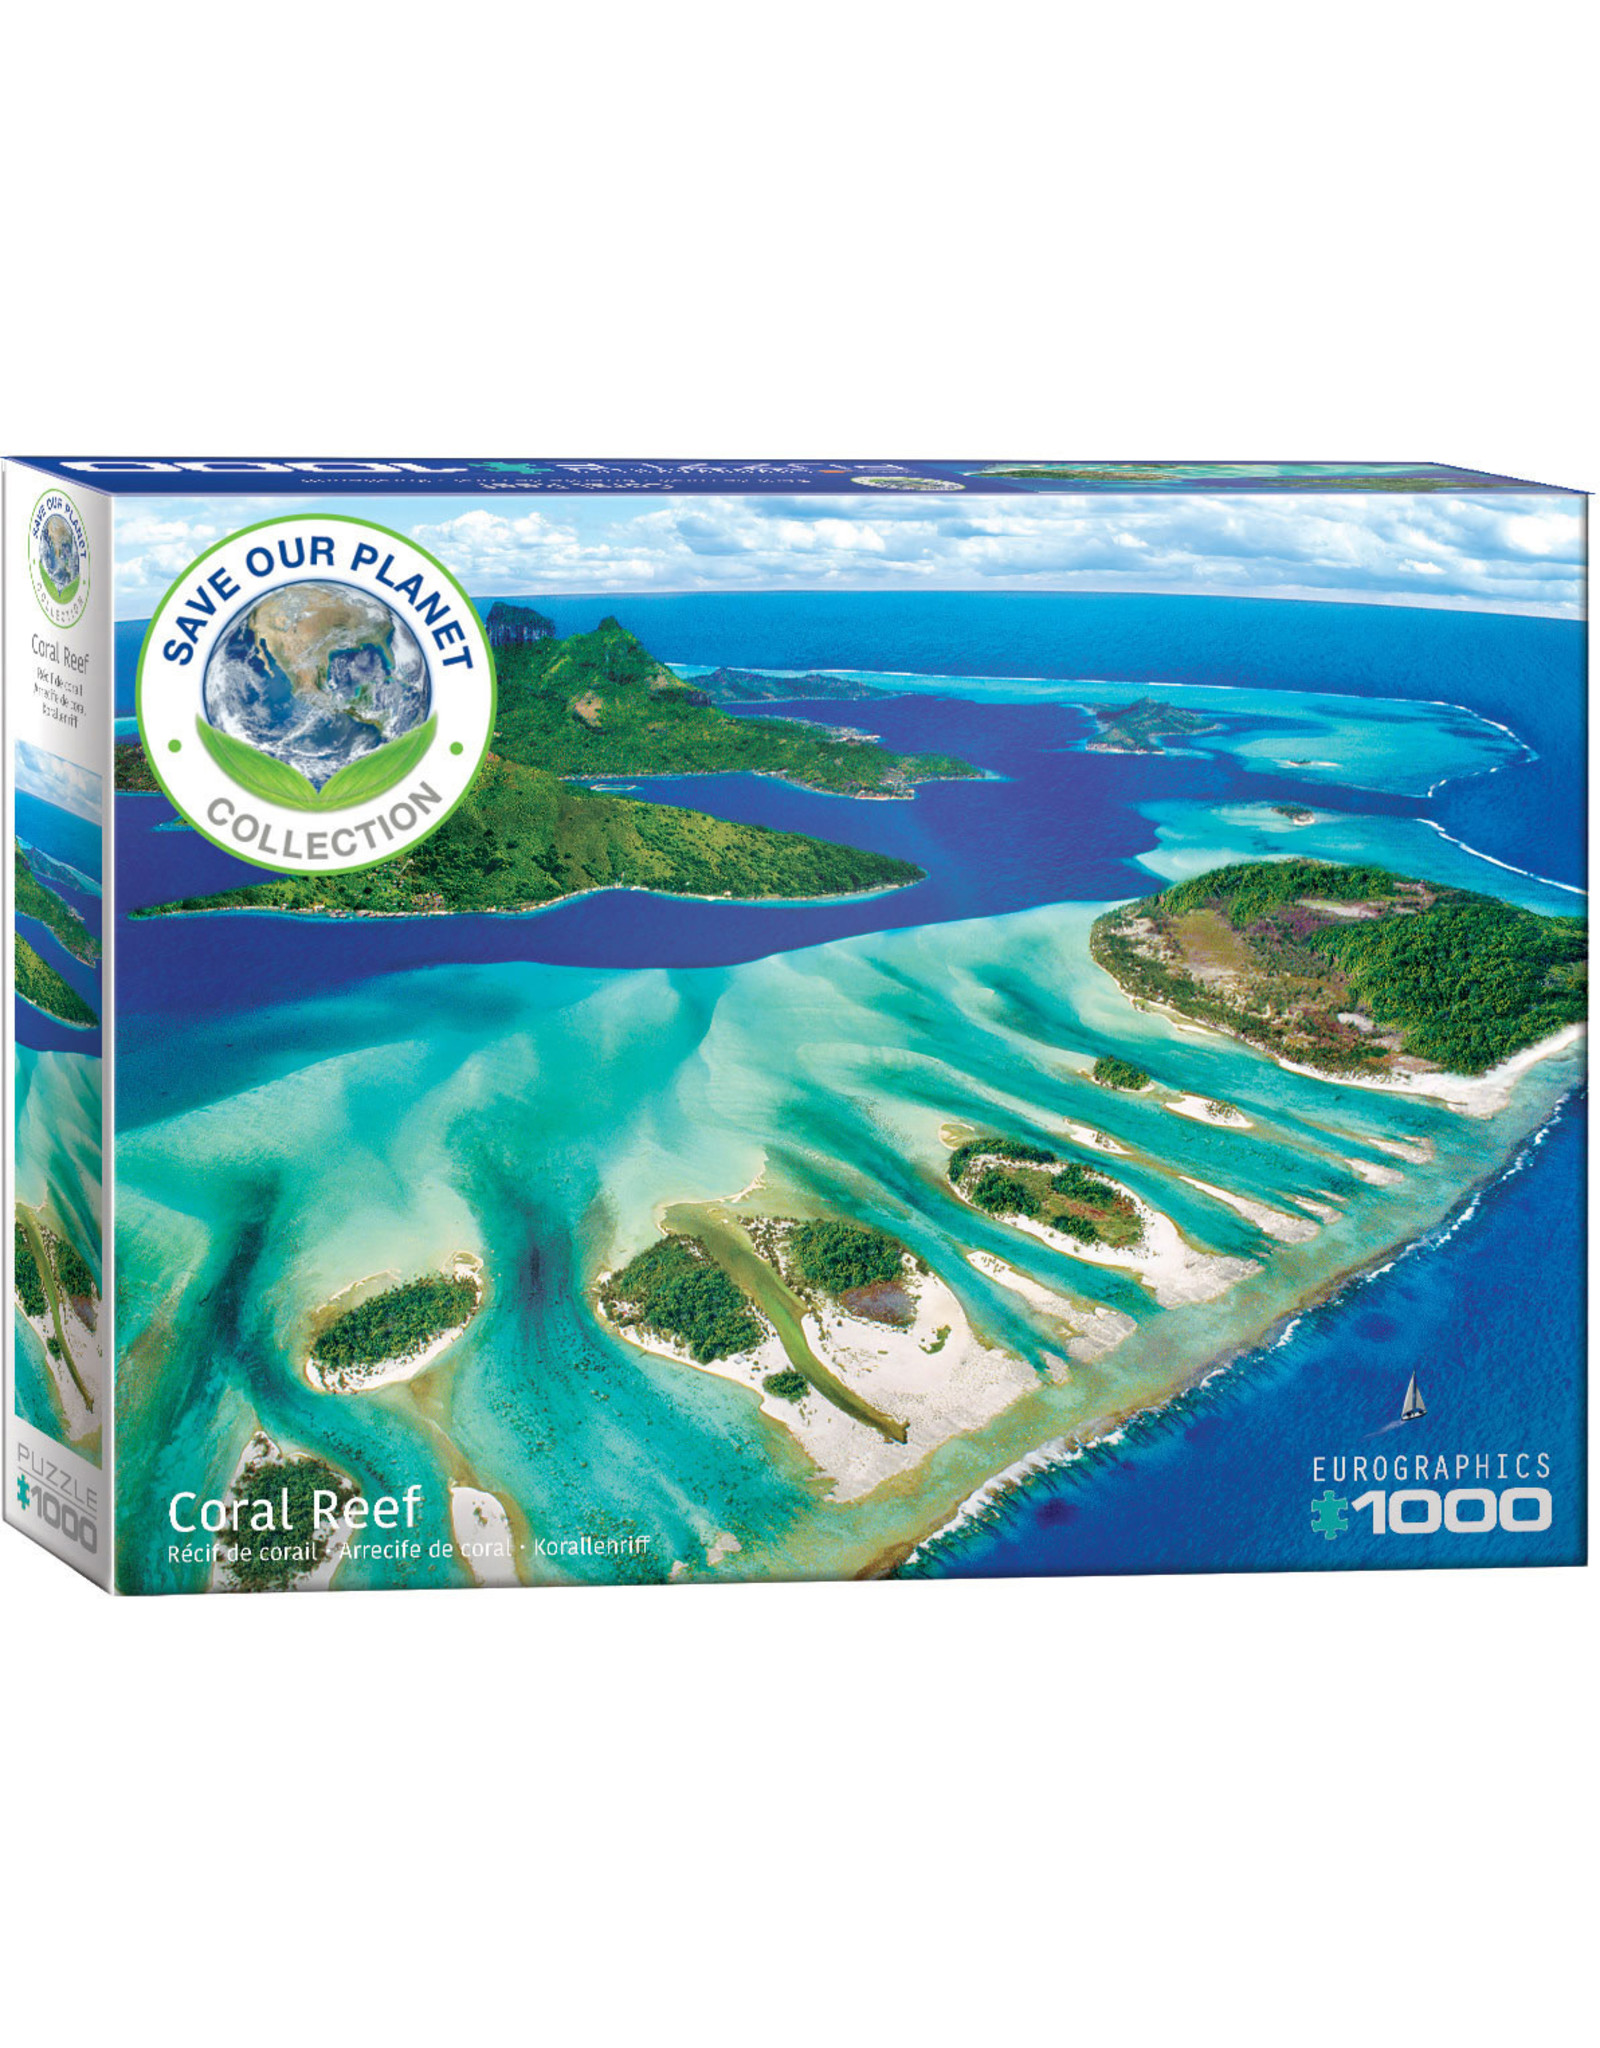 Coral Reef 1000pcs